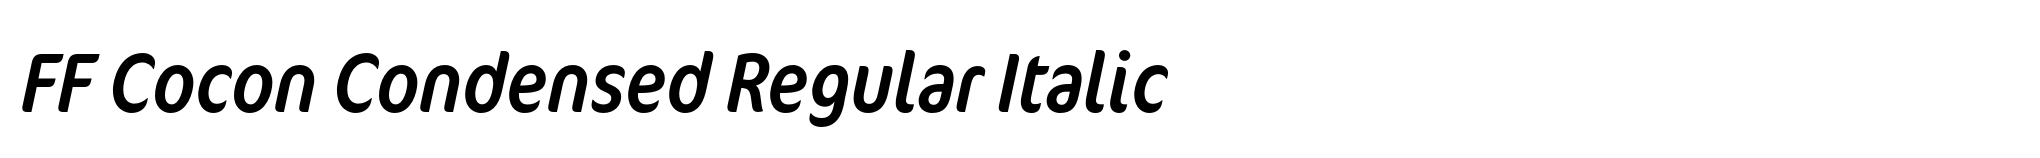 FF Cocon Condensed Regular Italic image